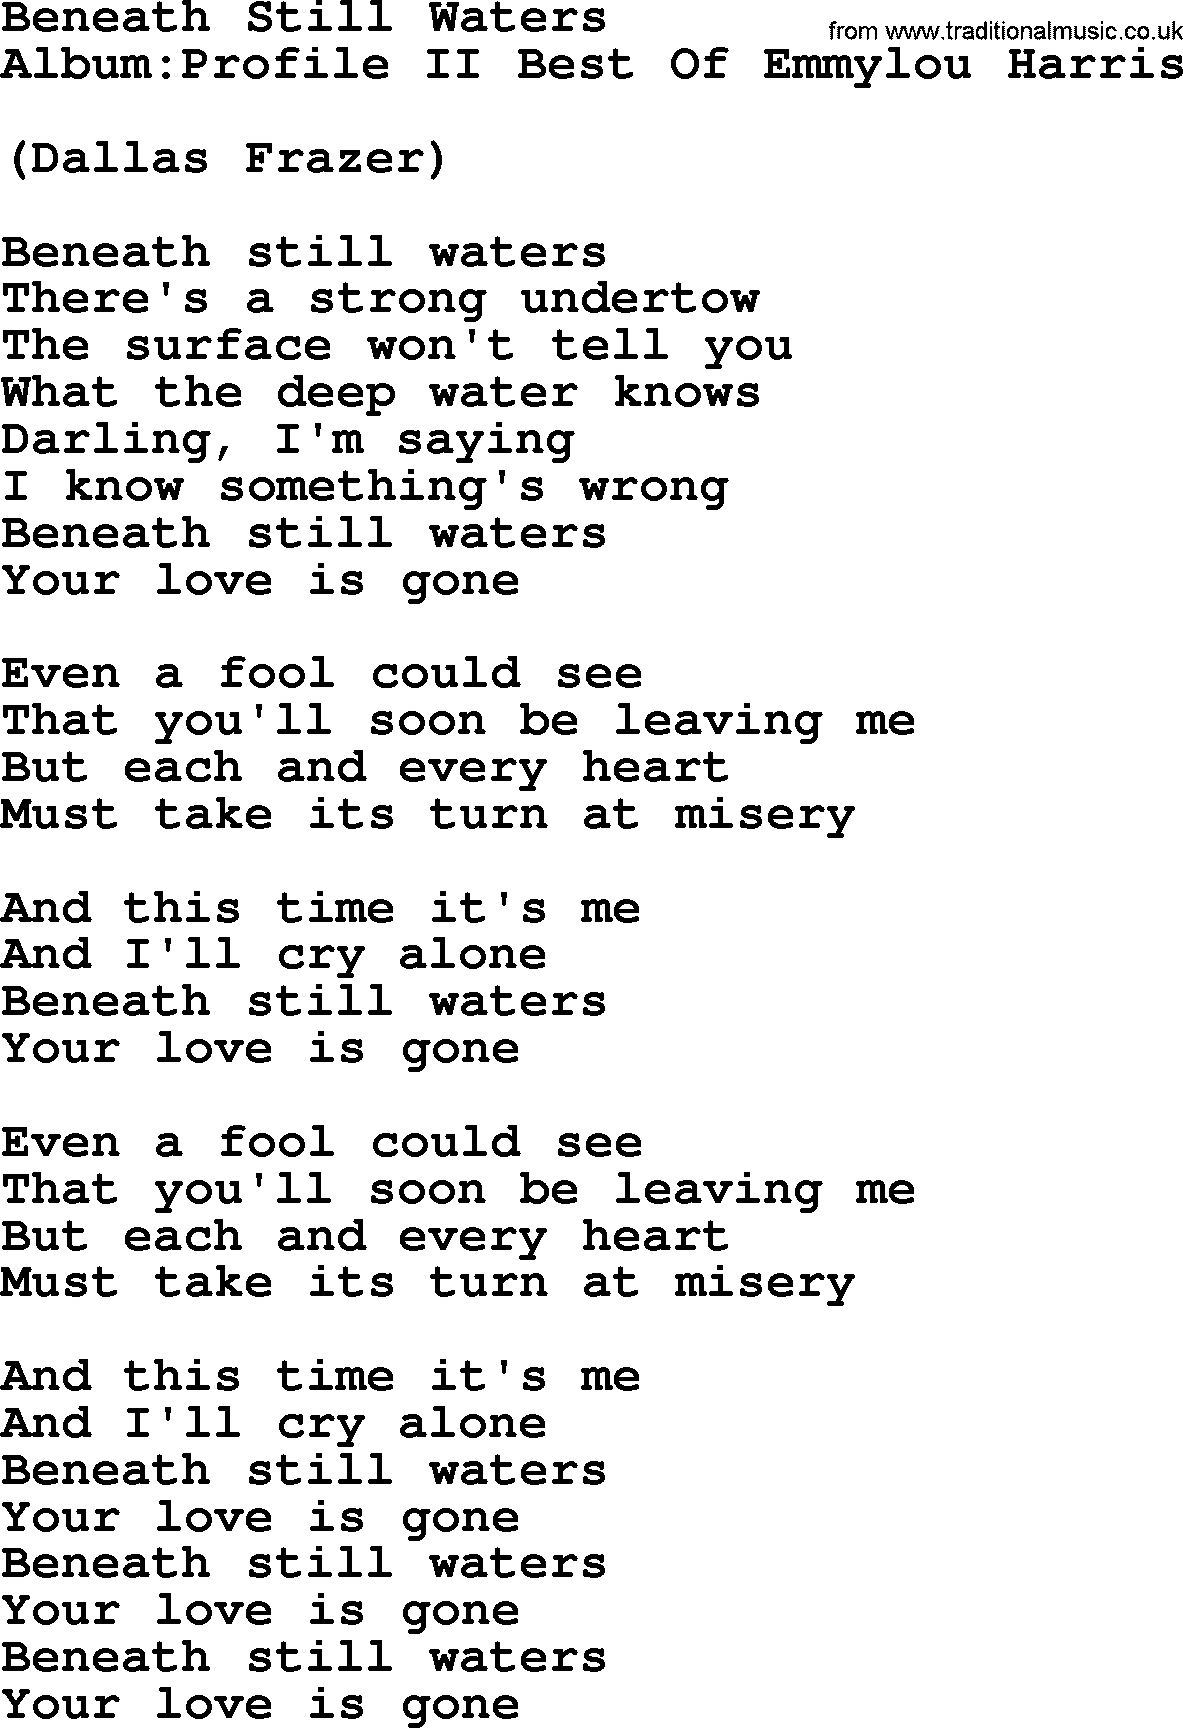 Emmylou Harris song: Beneath Still Waters lyrics